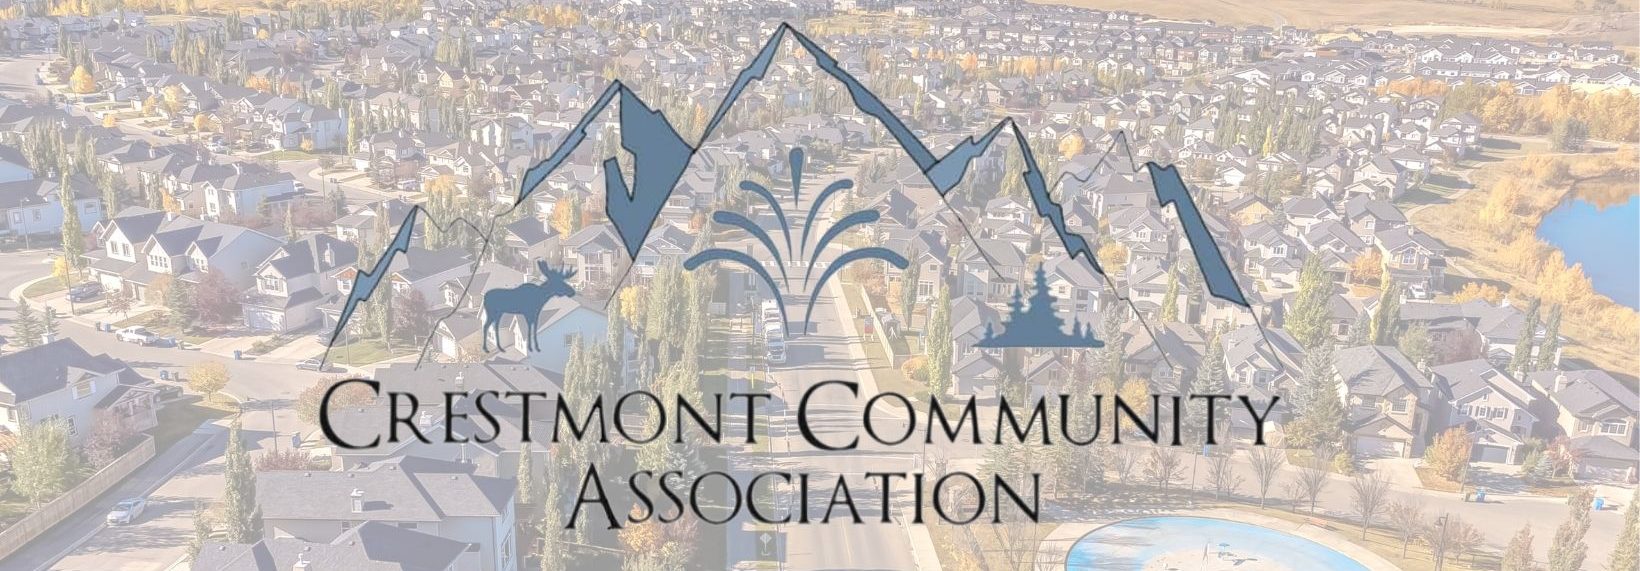 The Crestmont Community Association